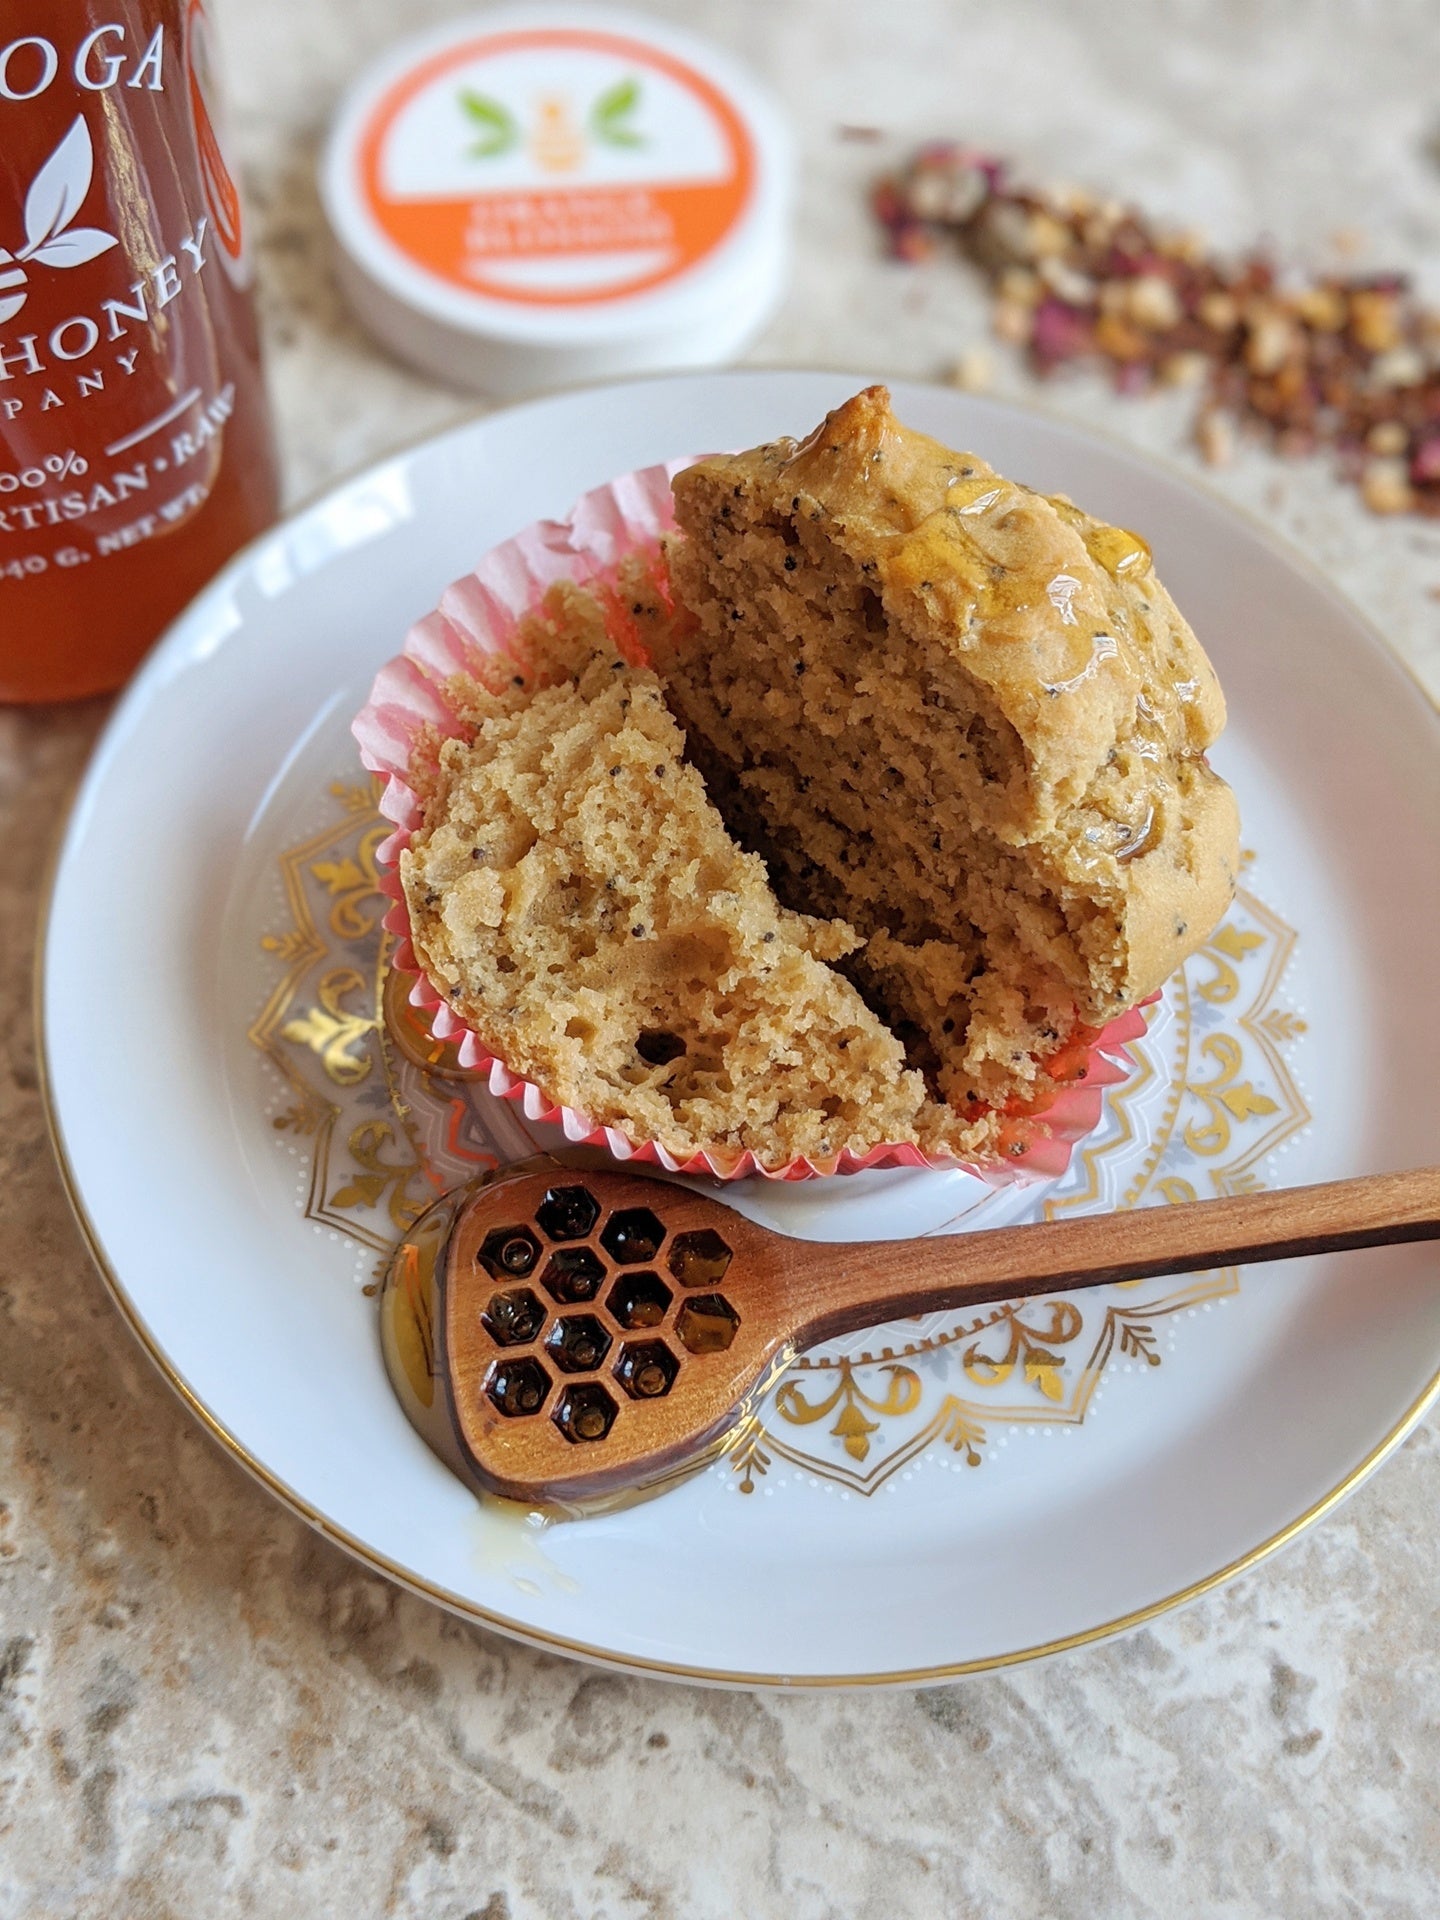 #Foodie Friday - Citrus Rose Muffins with Orange Blossom Honey